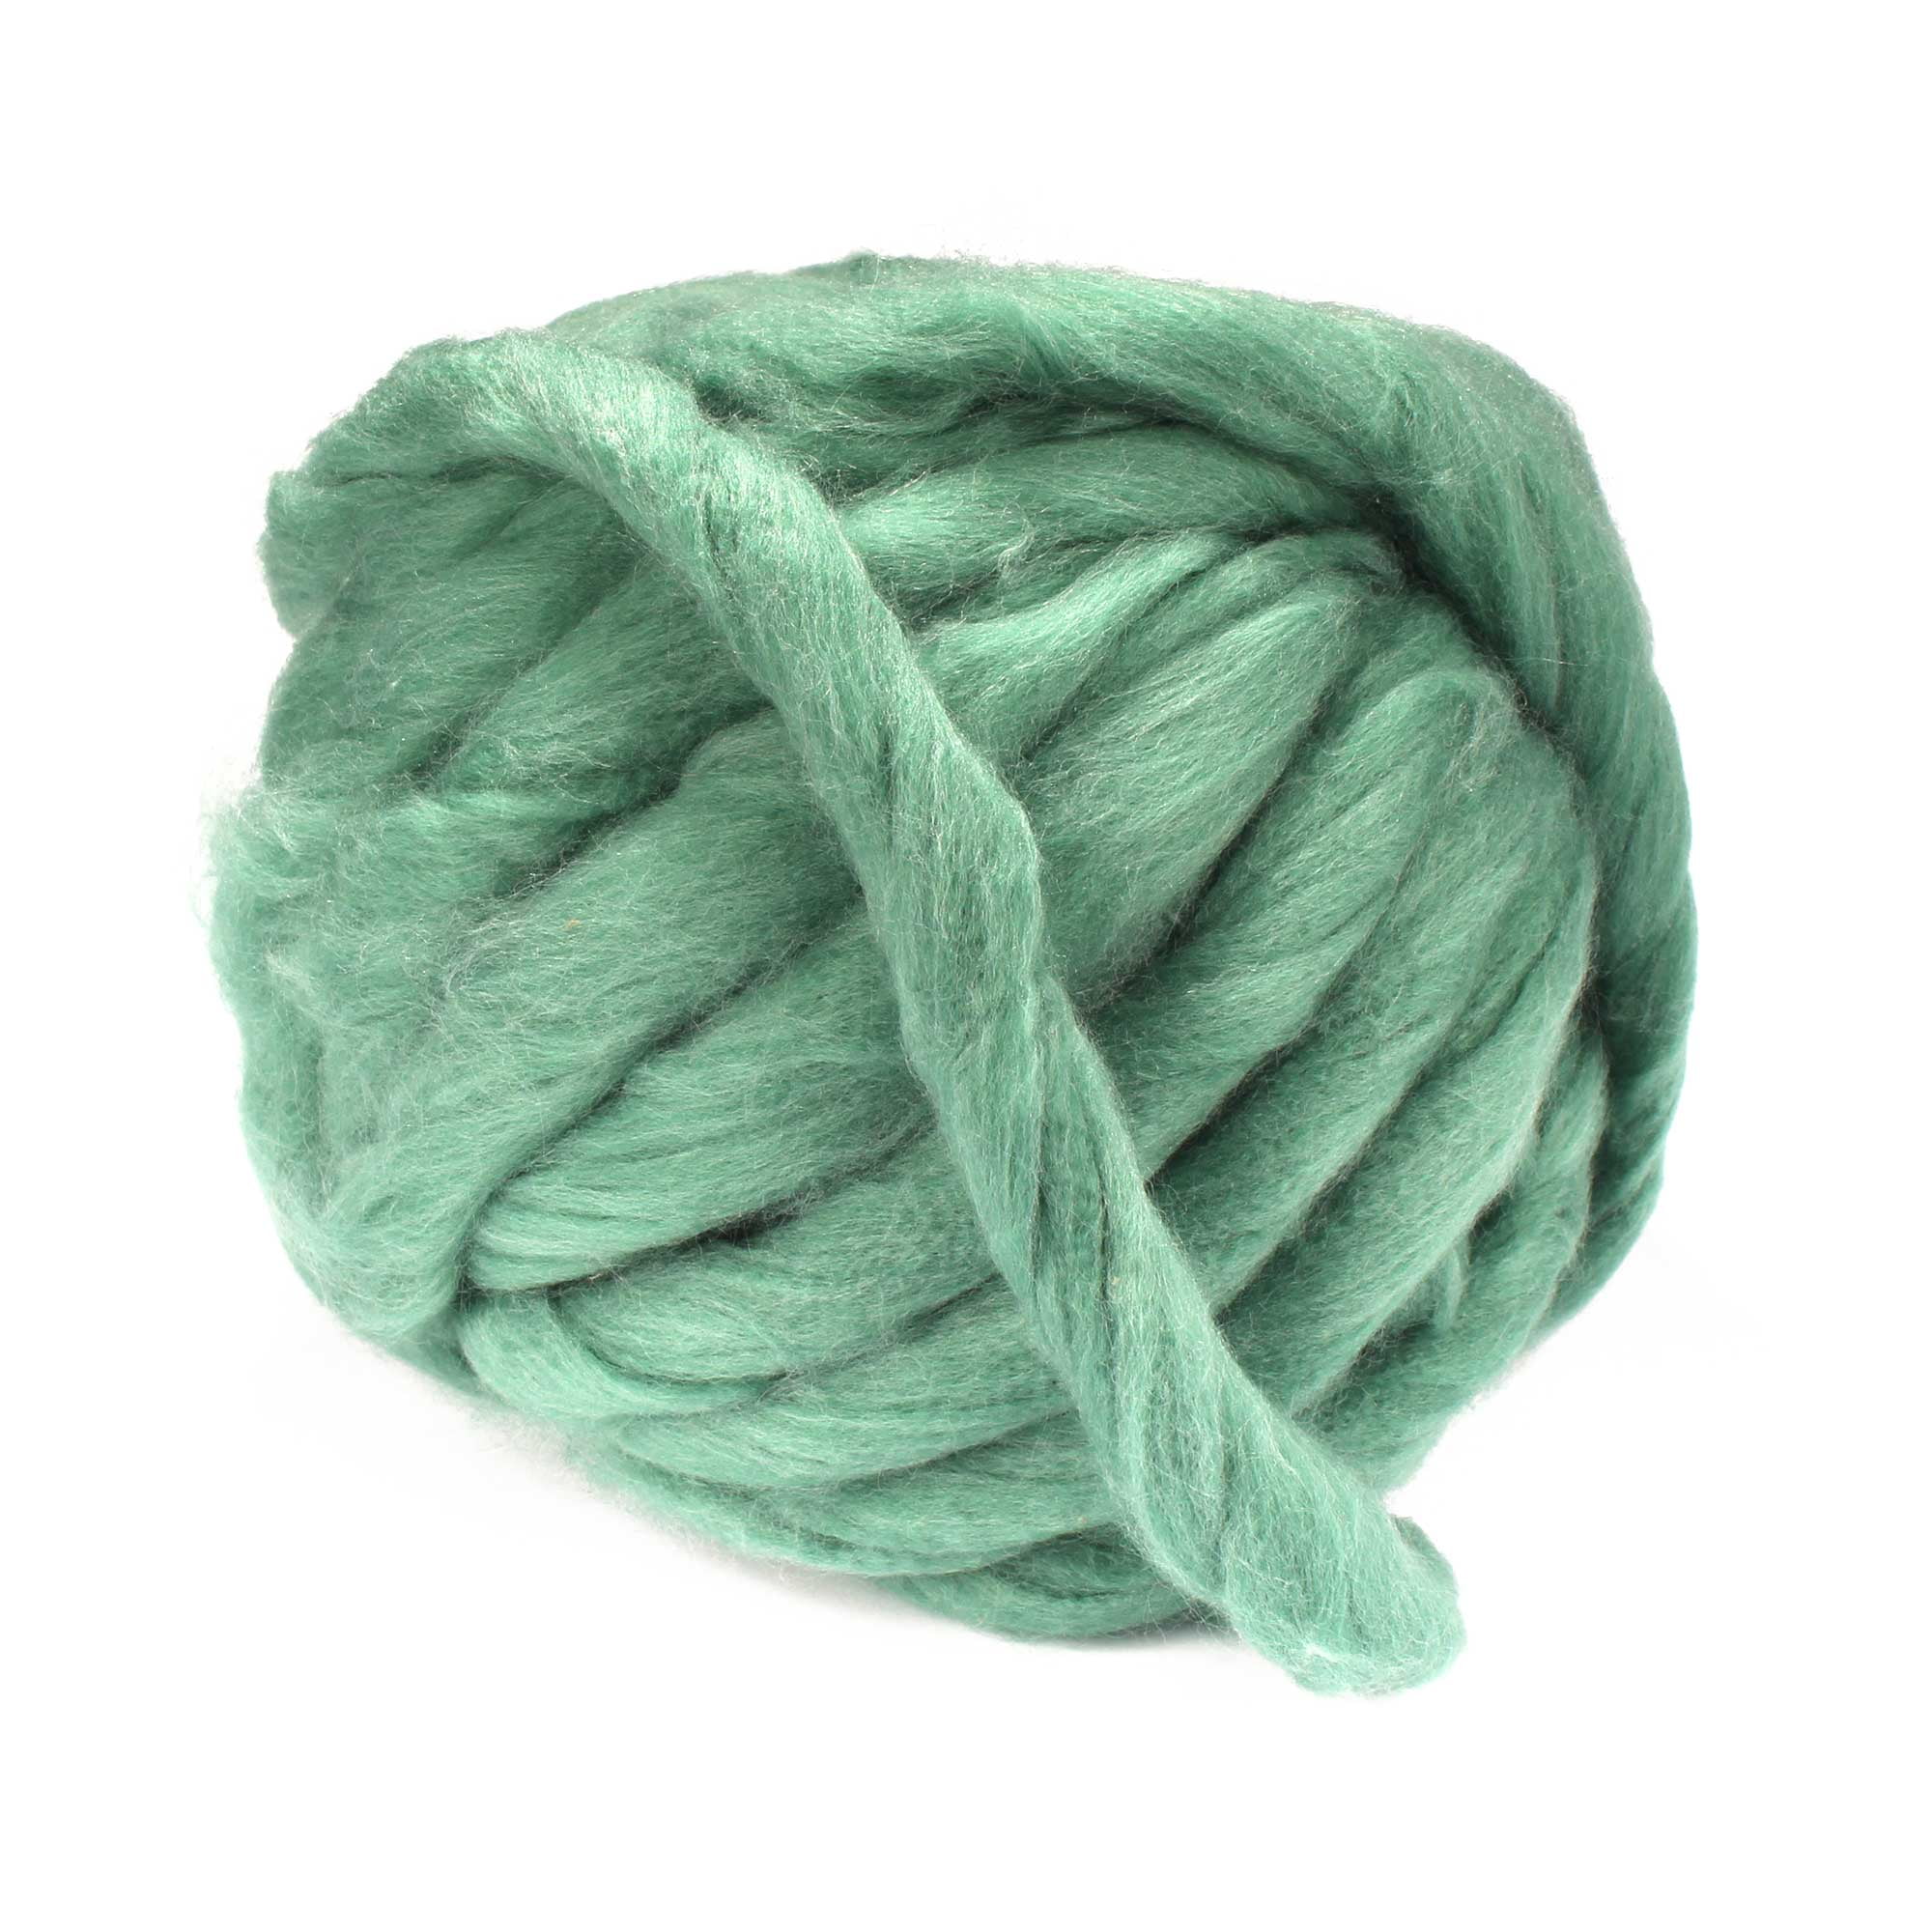 Bulky Yarns Wool Yarn Chunky Arm Knitting Super Soft Giant Ball Crocheting DIY 